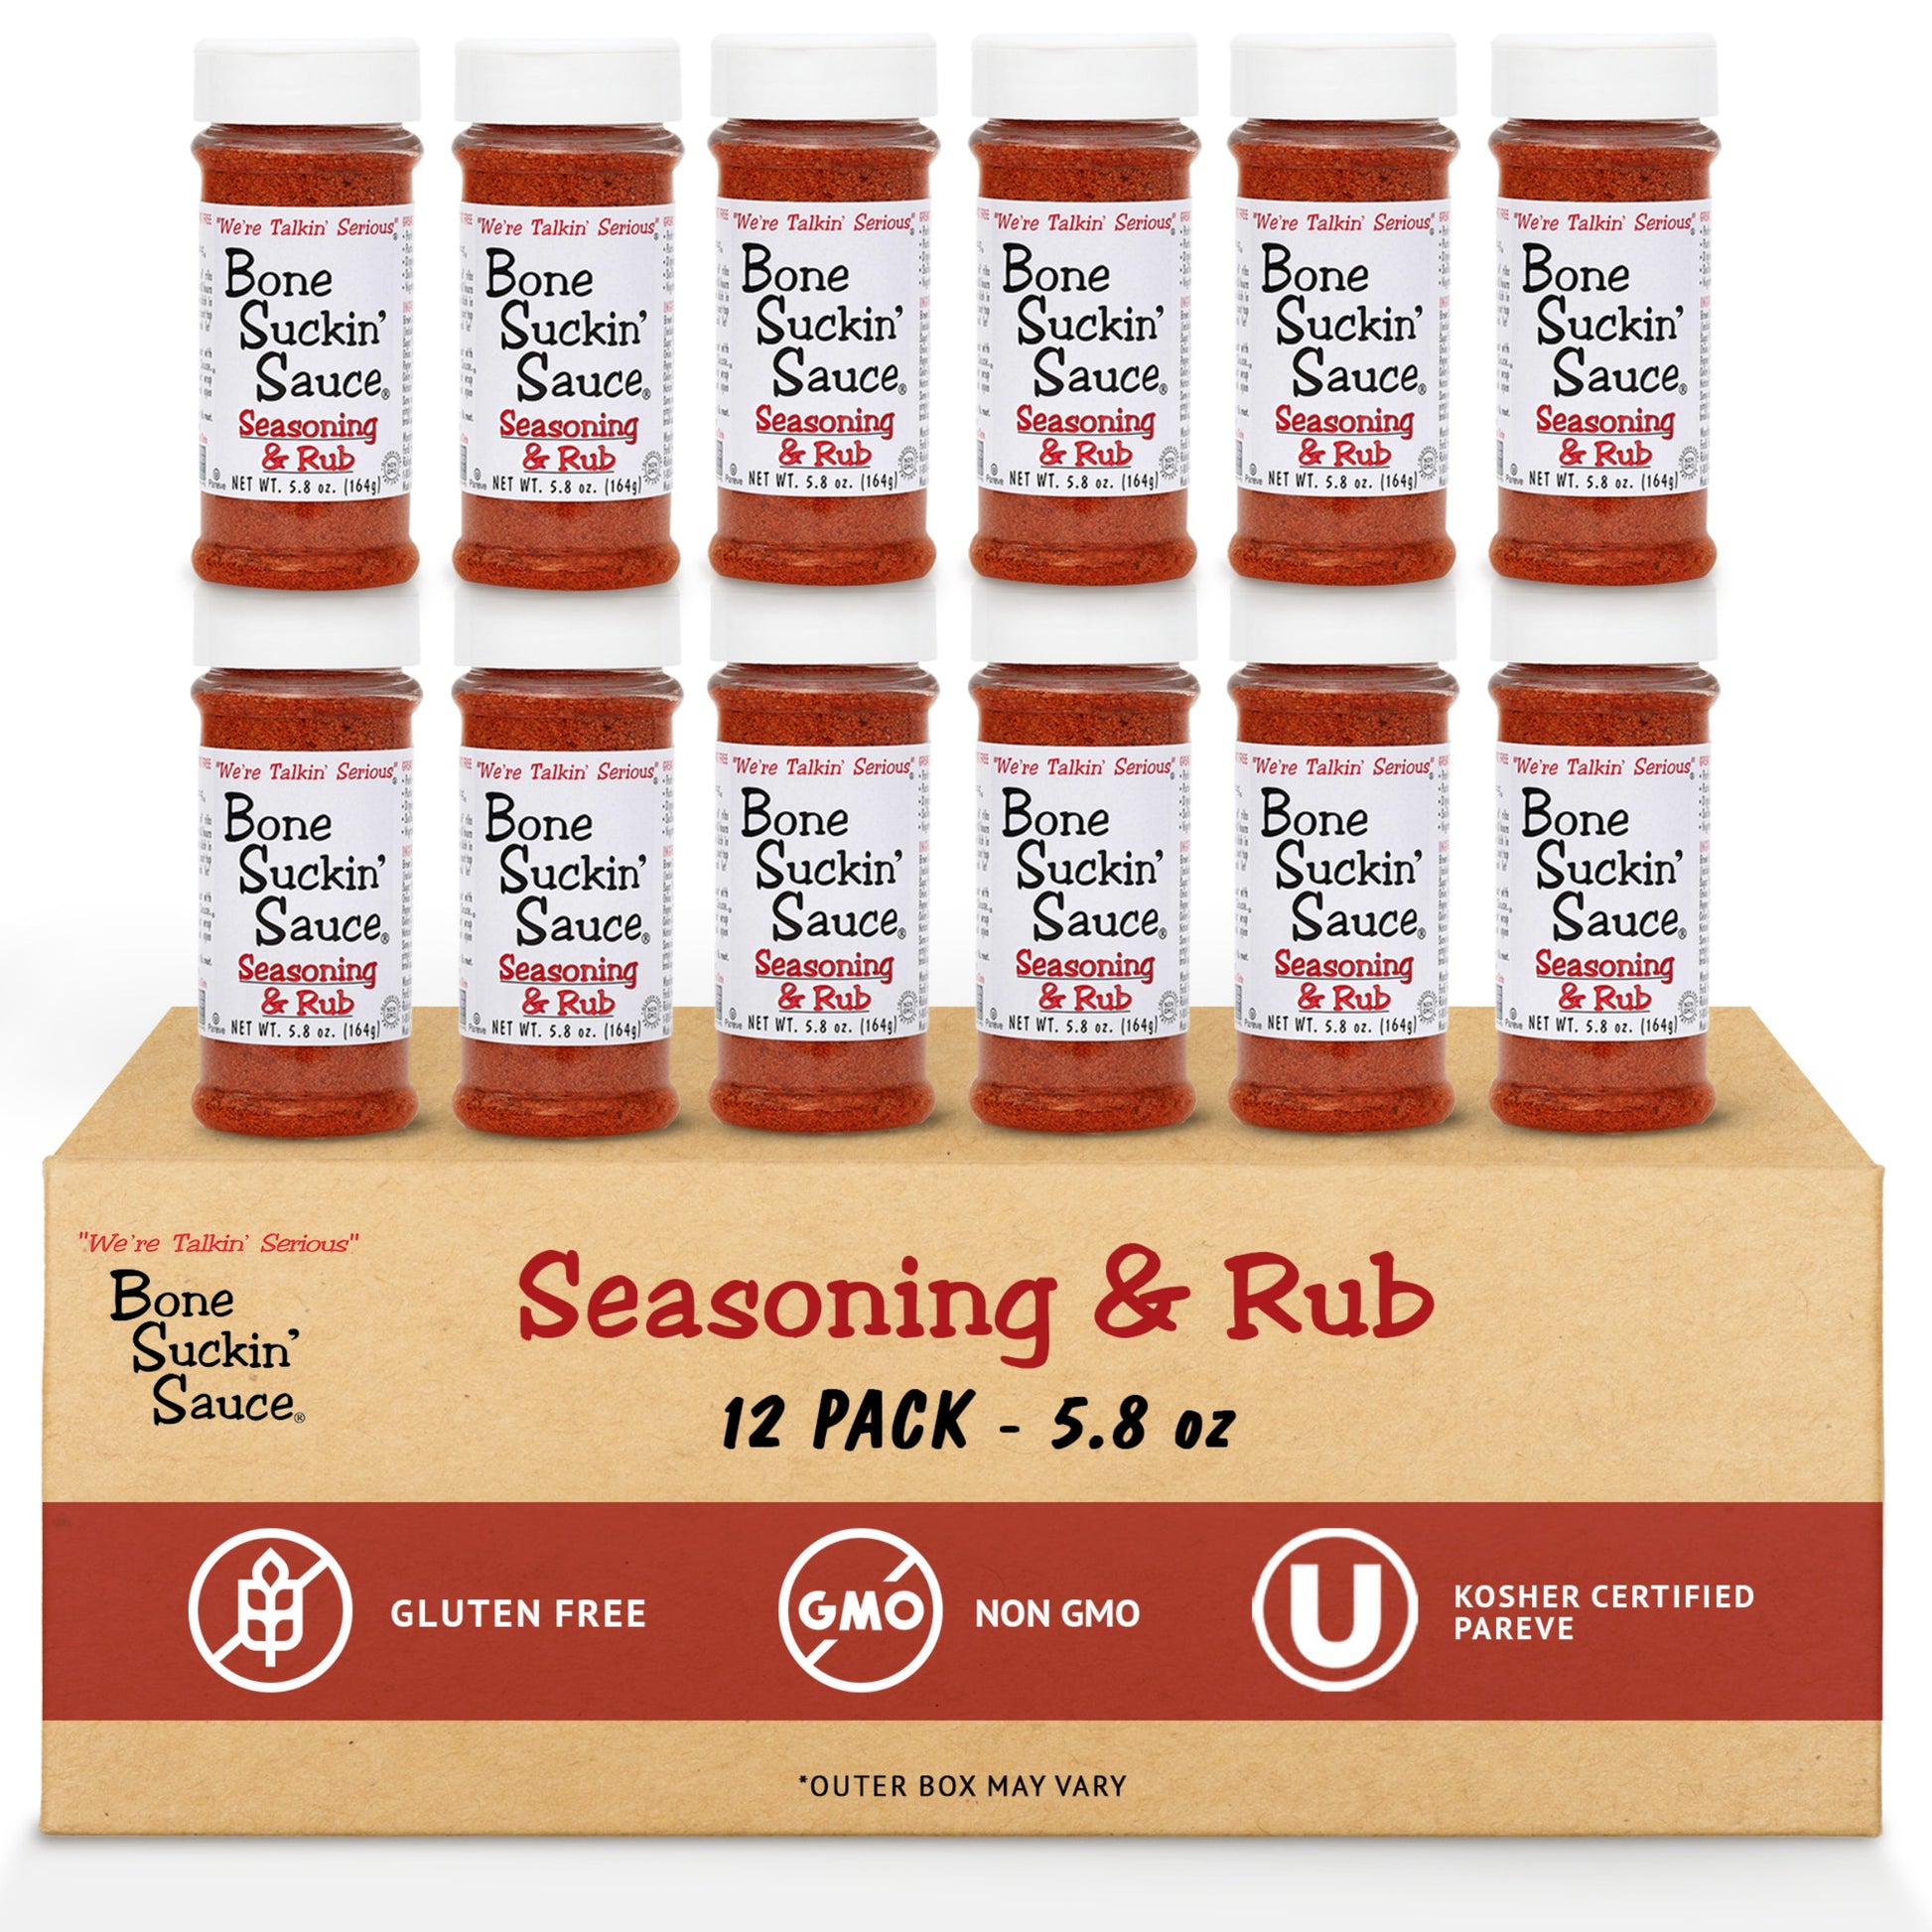 Bone Suckin’® Seasoning & Rub, 5.8 oz. 12 pack